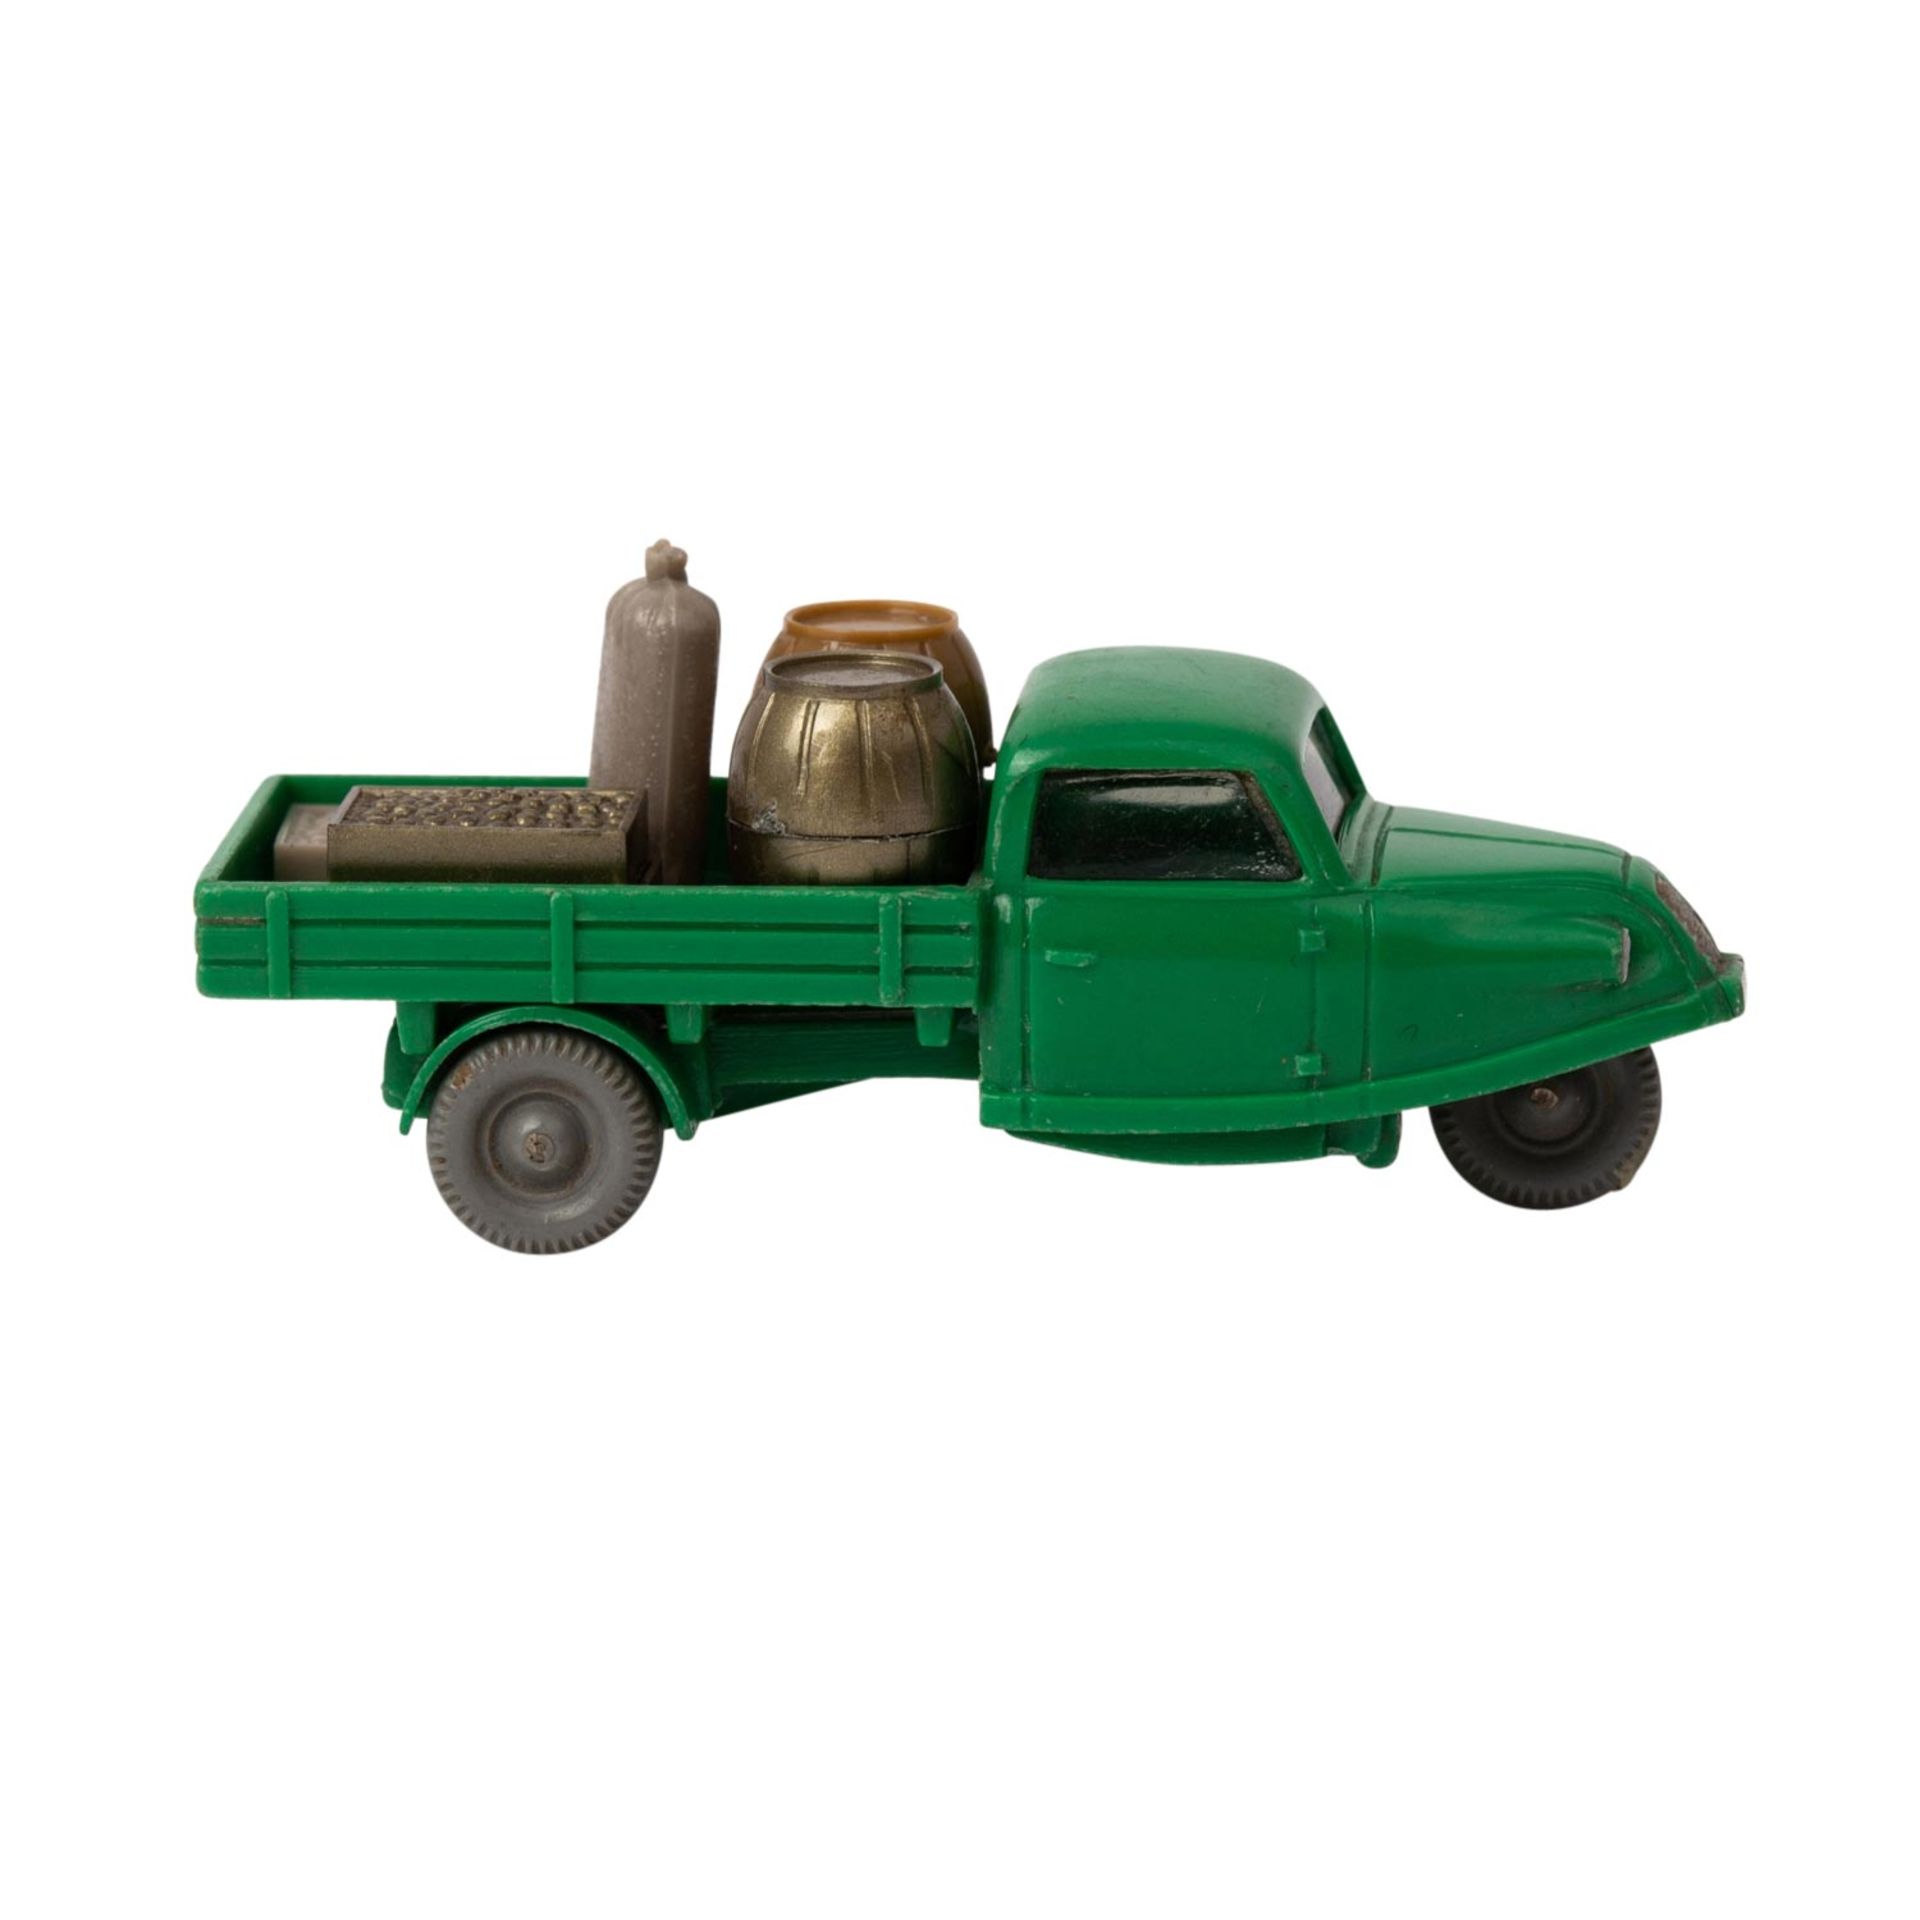 WIKING Goli-Dreiradwagen, 1959/64,grüne Karosserie, Bodenprägung "WM" , Grill, Schei - Bild 4 aus 5